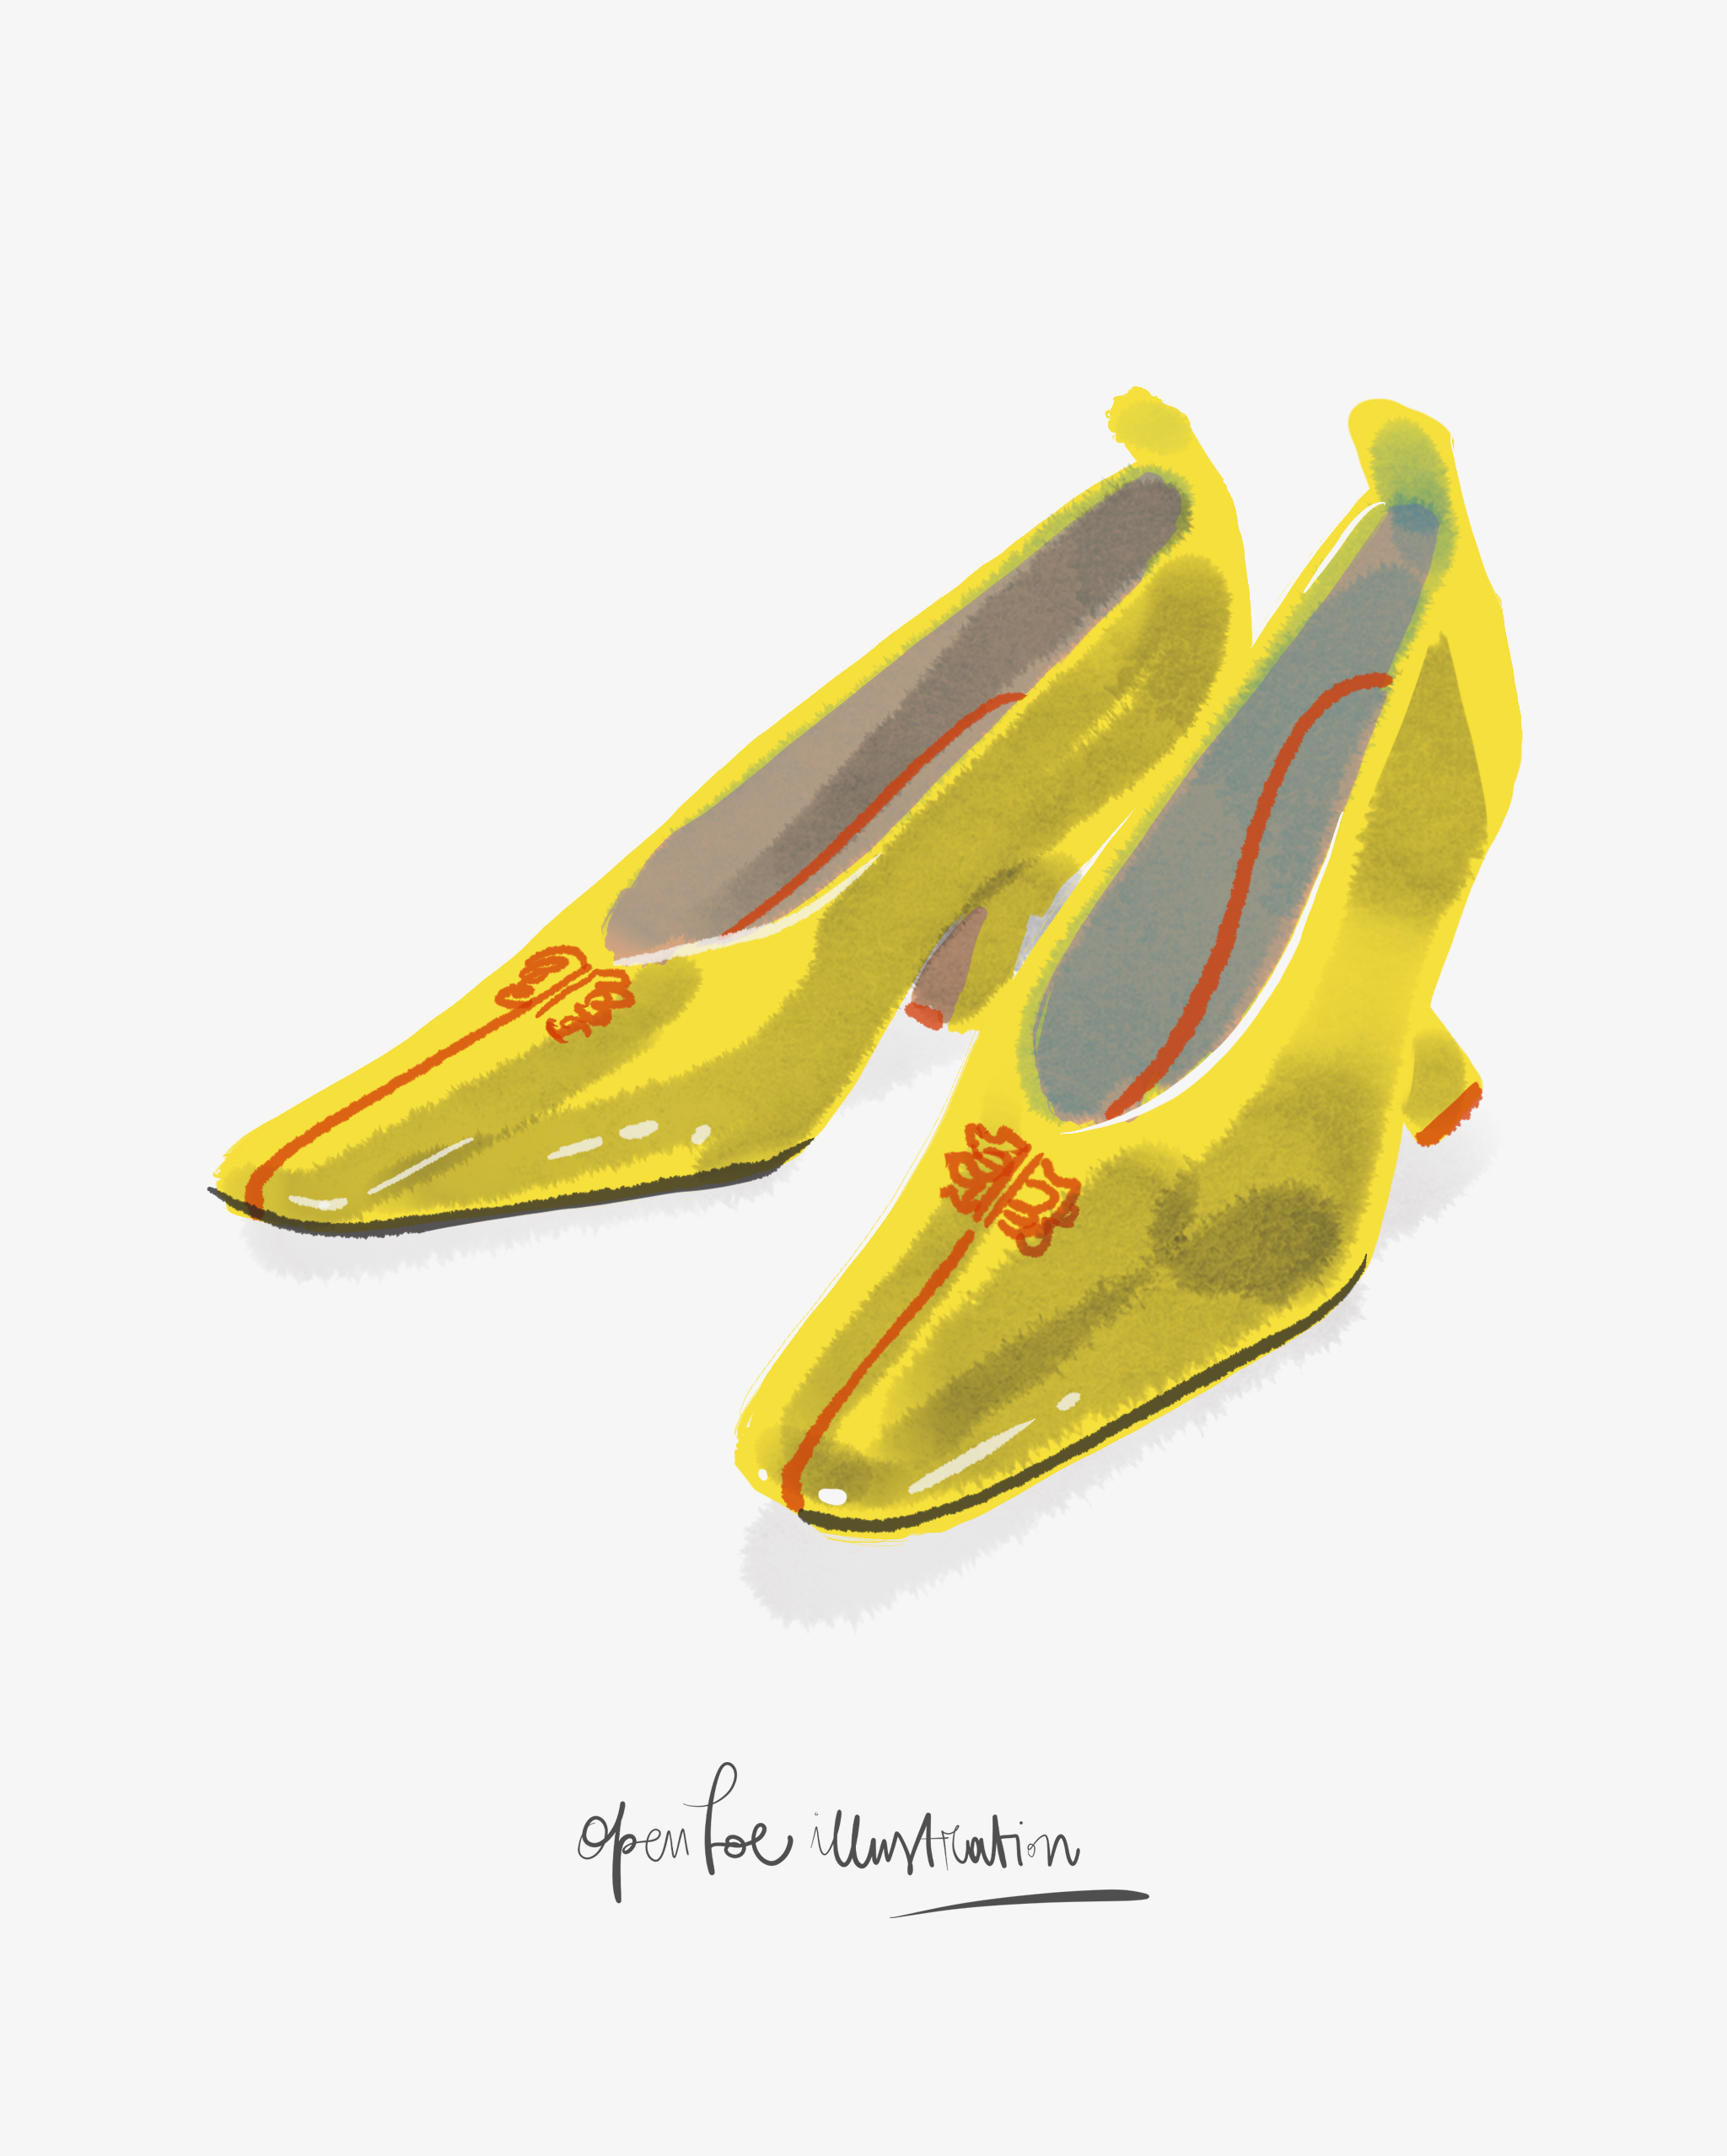 Shoes still life illustration by Silvana Mariani